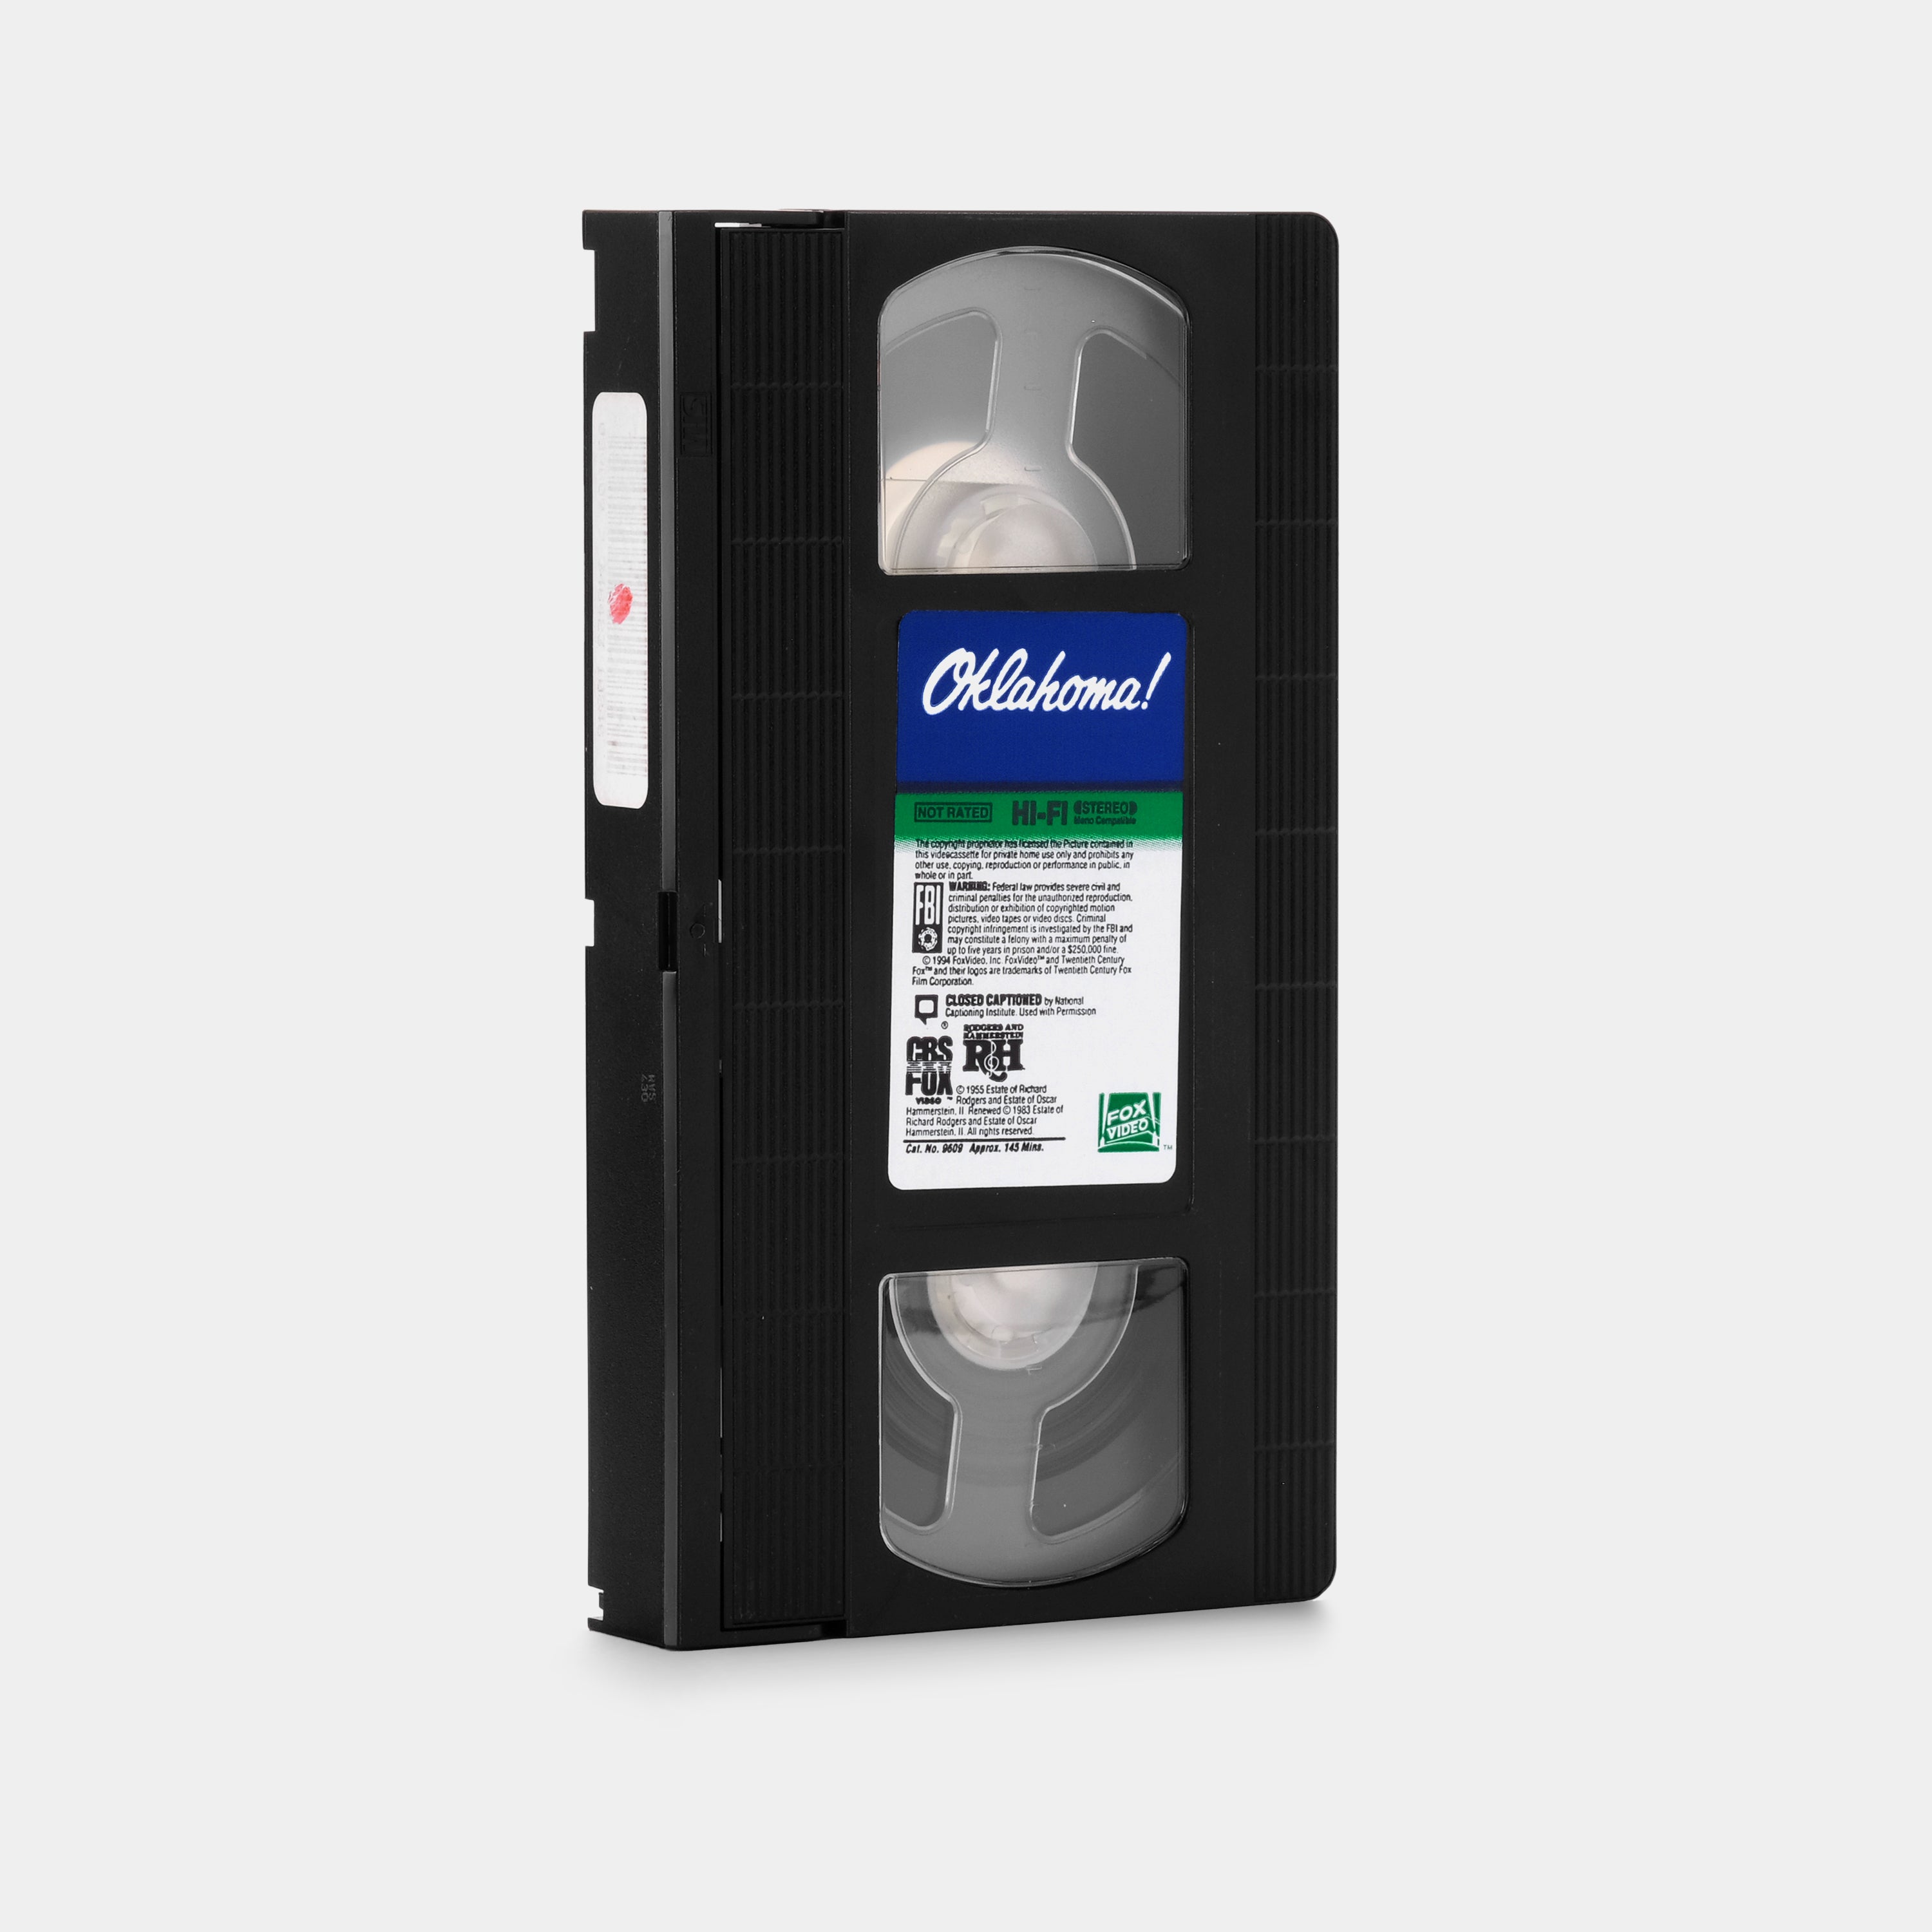 Oklahoma! (Golden Anniversary Edition) VHS Tape